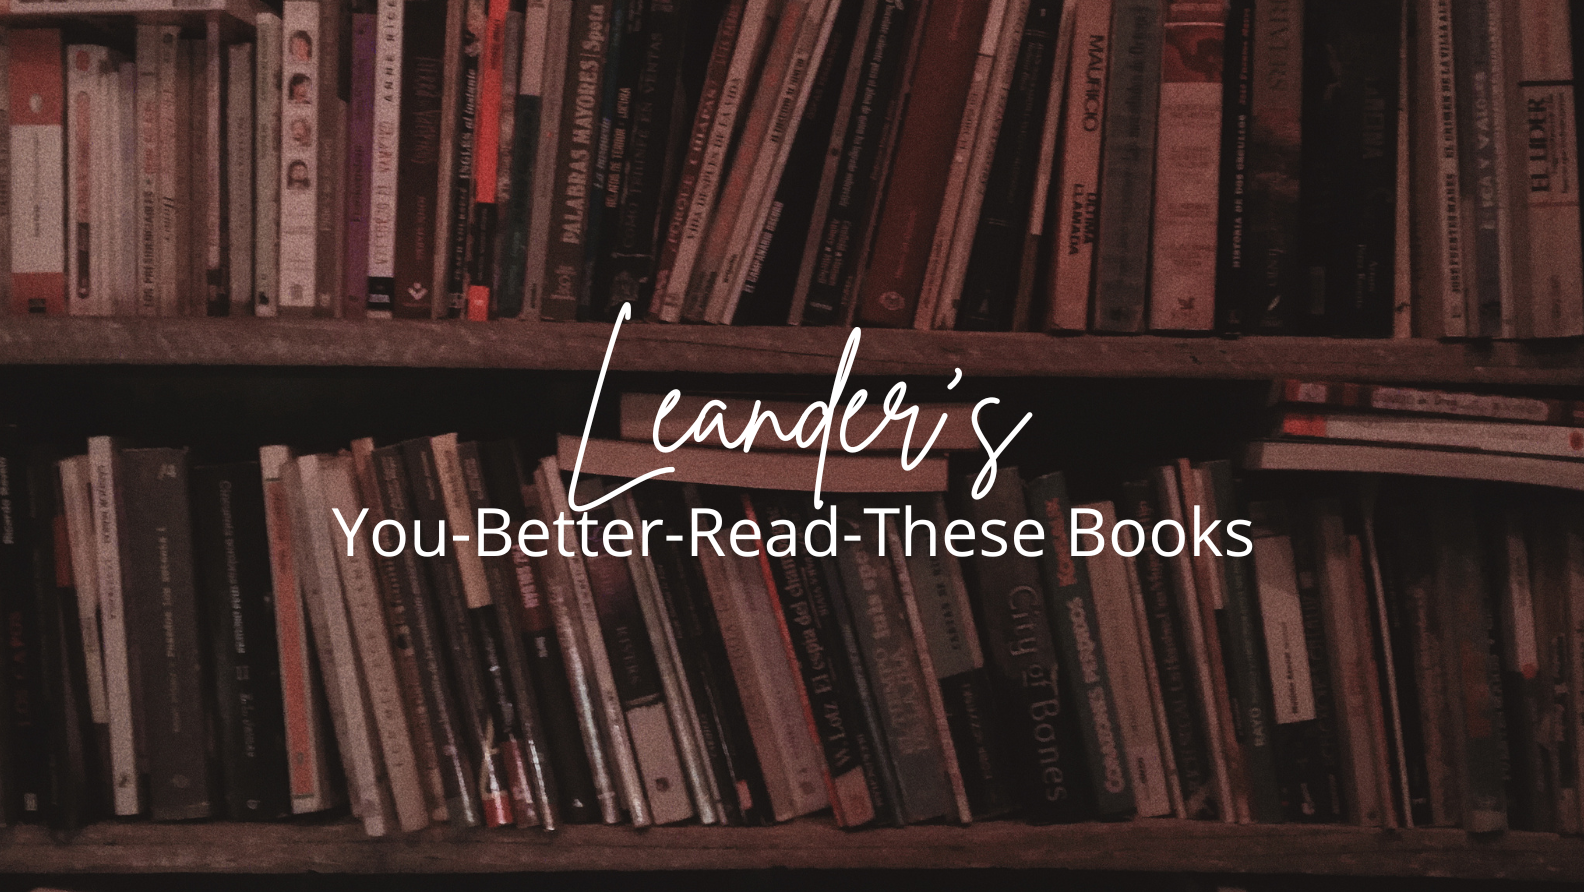 Leander's You-Better-Read-These Books | Vol. 005 [Neville Longbottom]